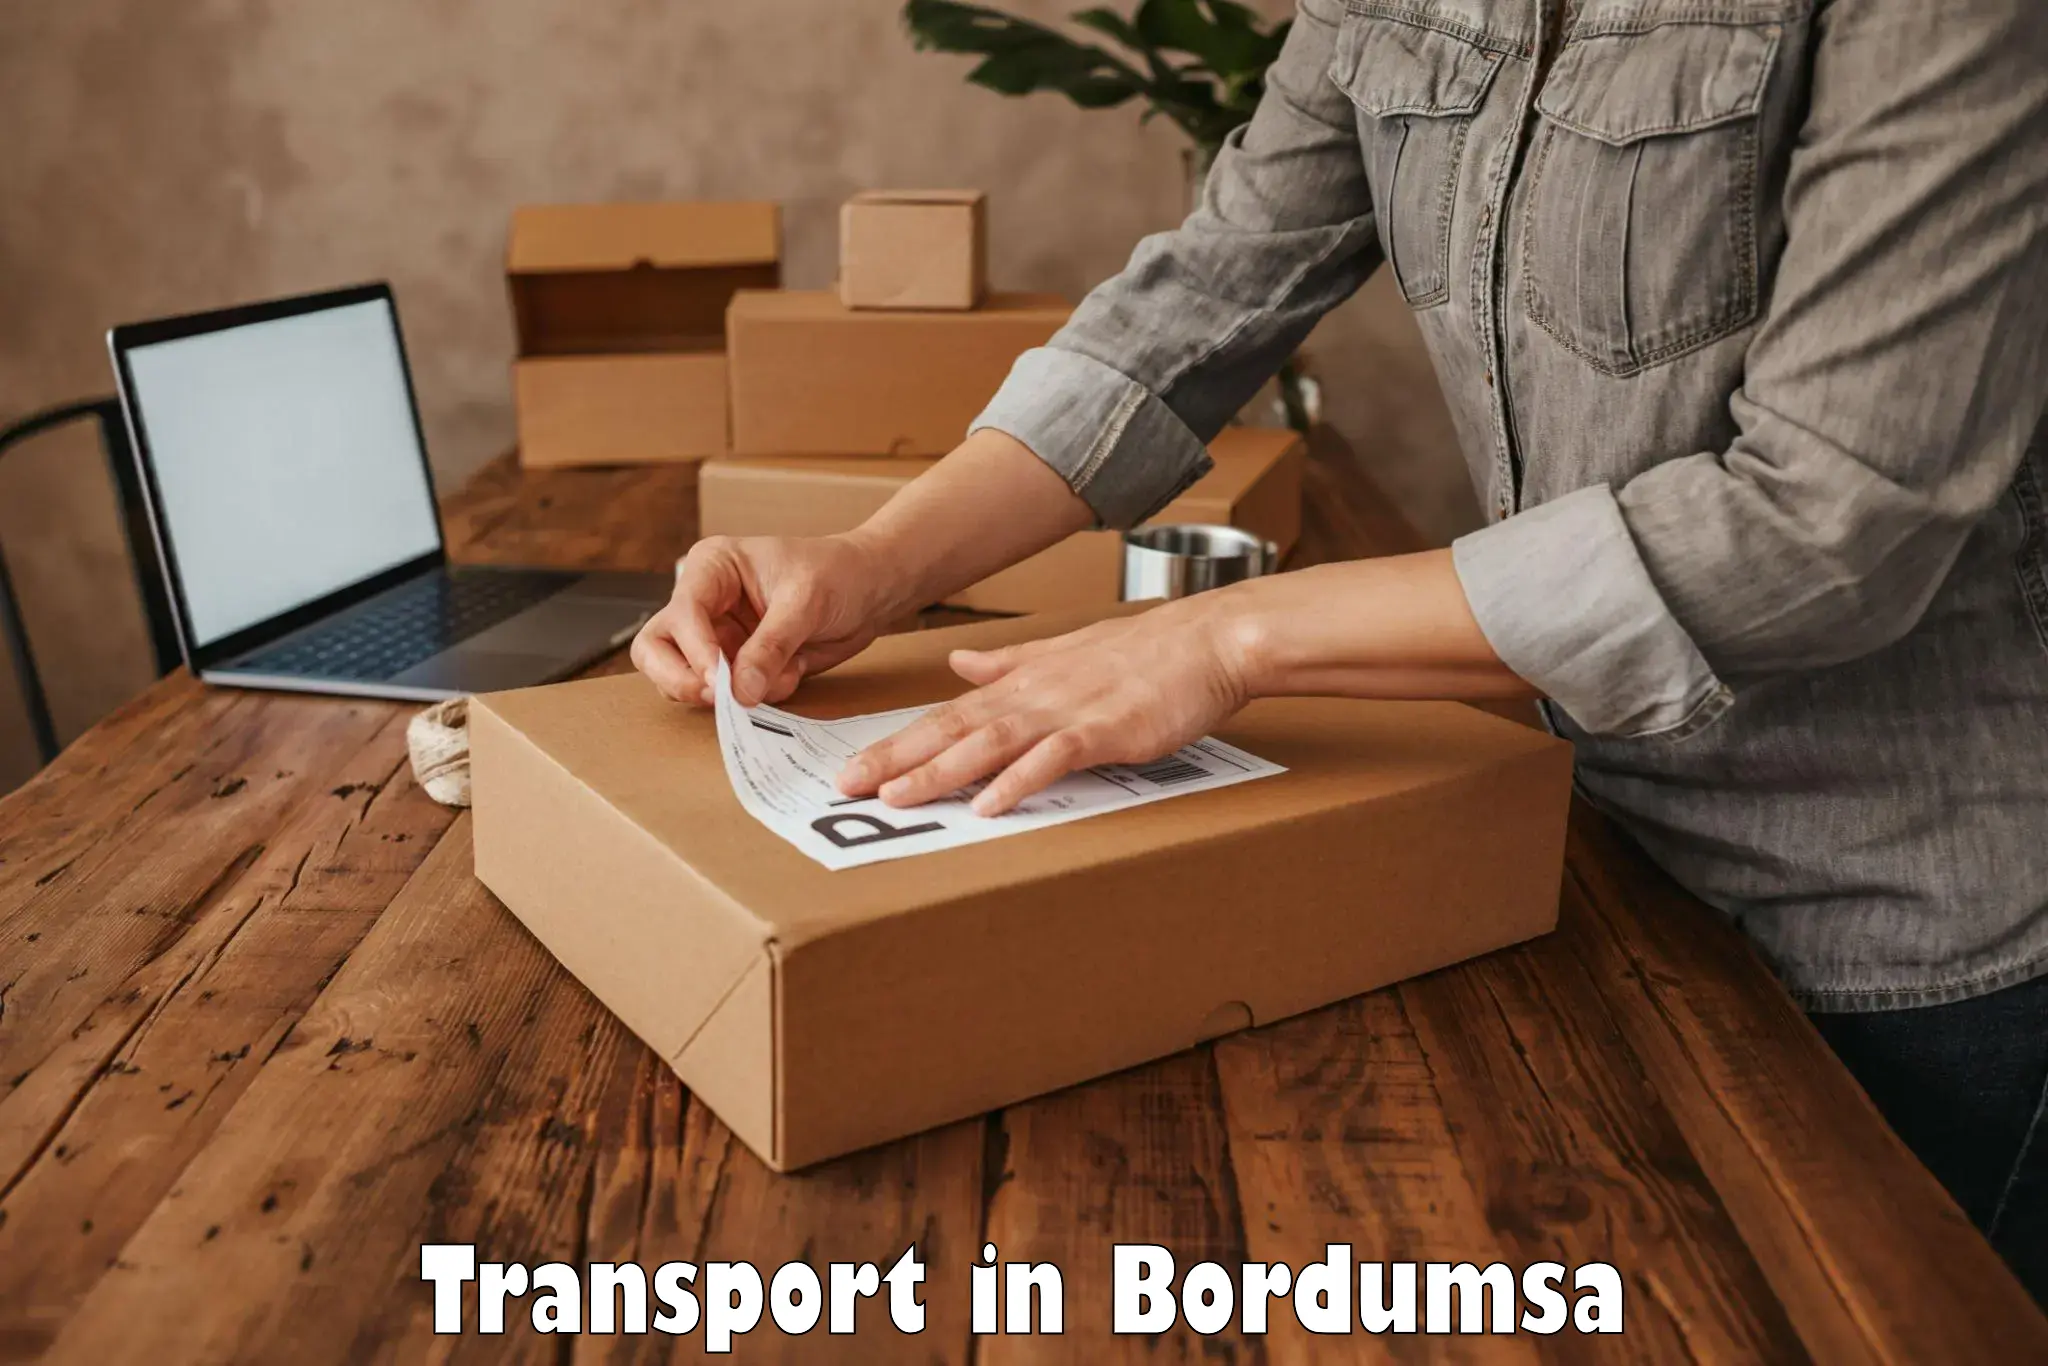 Container transport service in Bordumsa